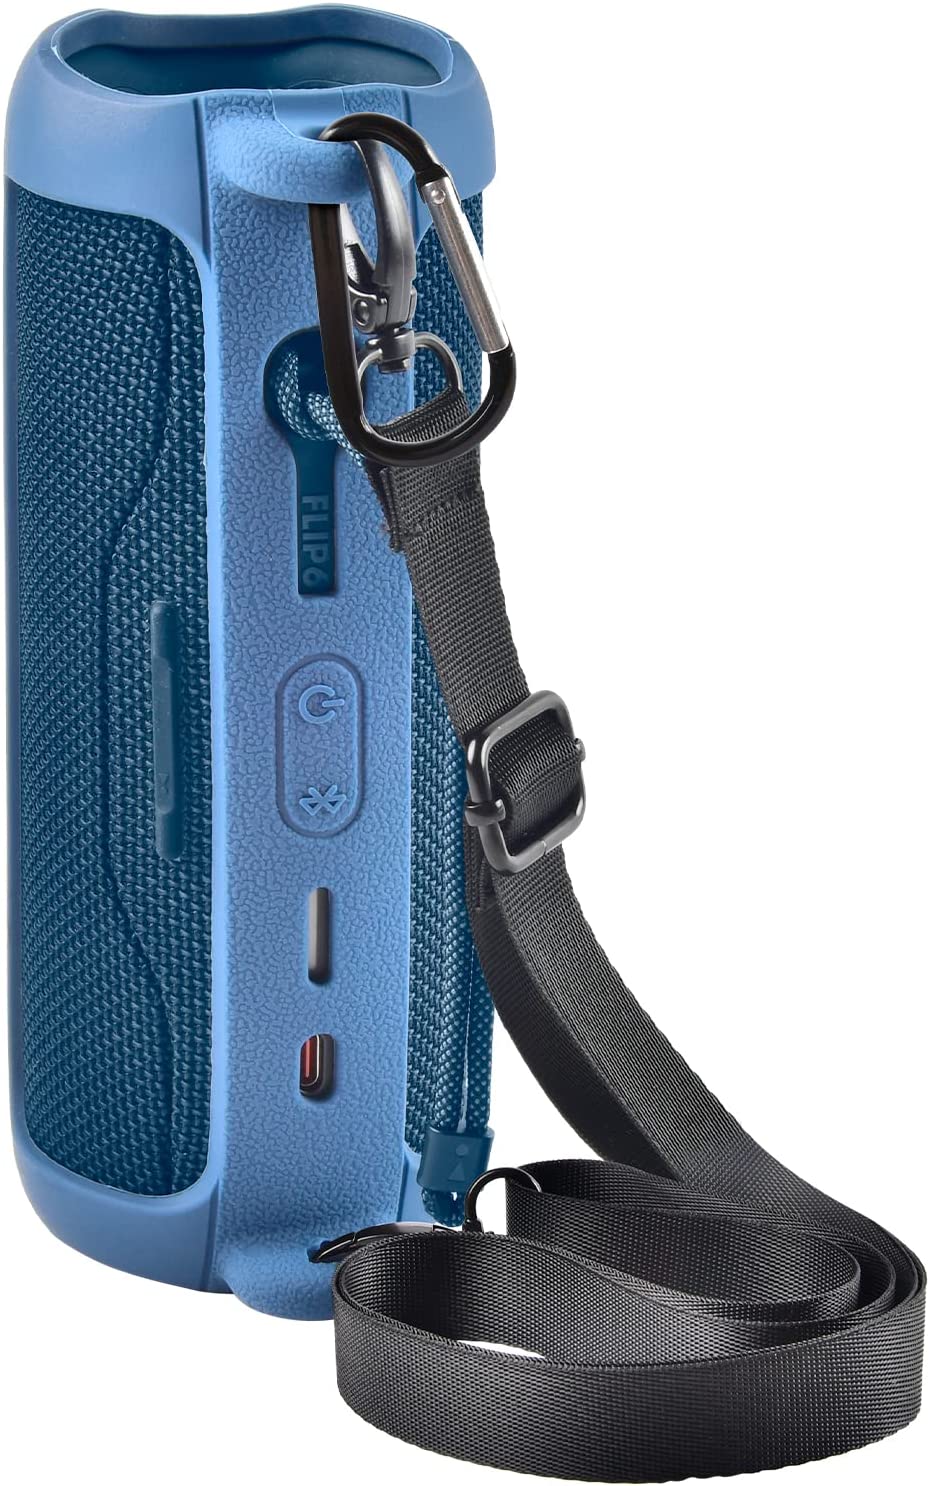 For J BL FLIP ESSENTIAL 2 Speaker Silicone Case Outdoor Portable Audio Case  - AliExpress